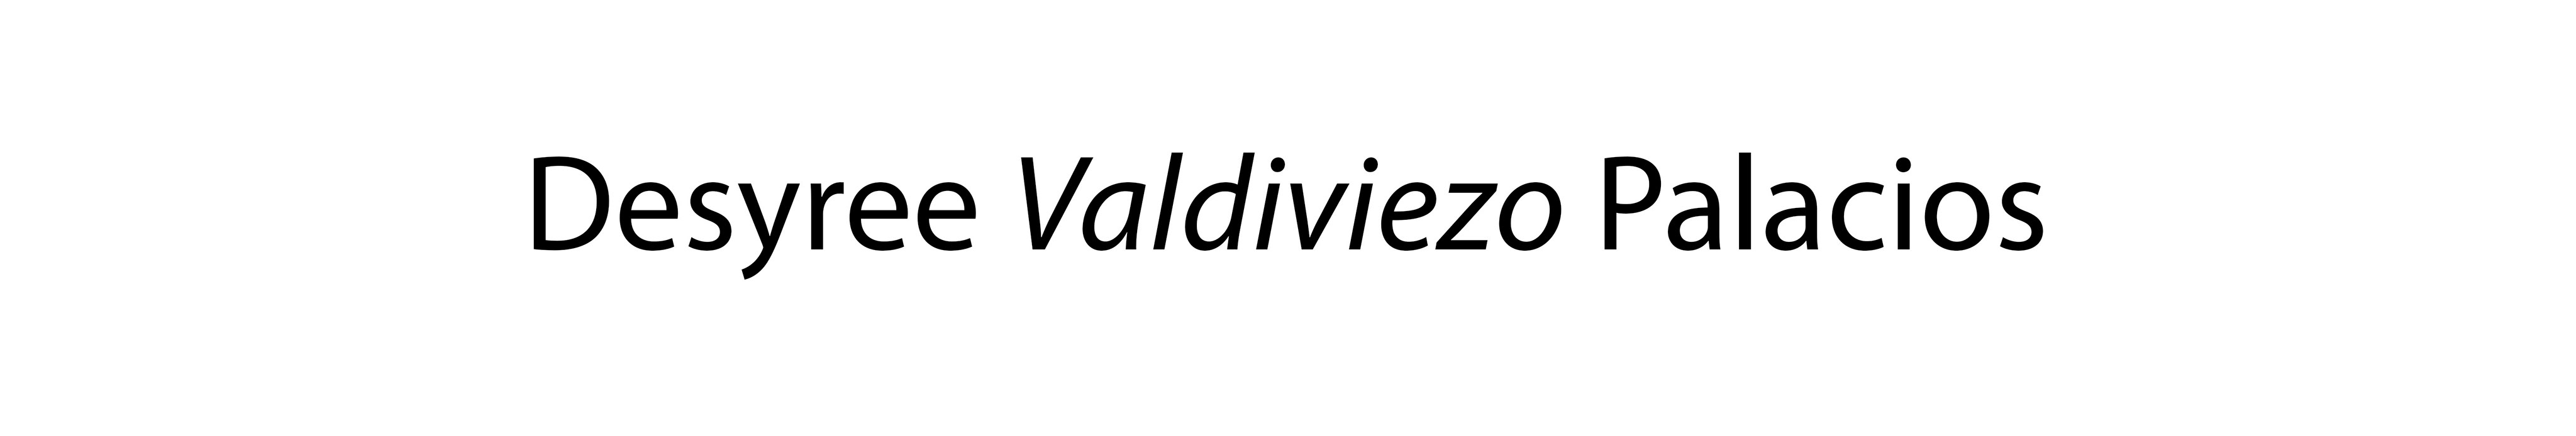 Desyree Valdiviezo